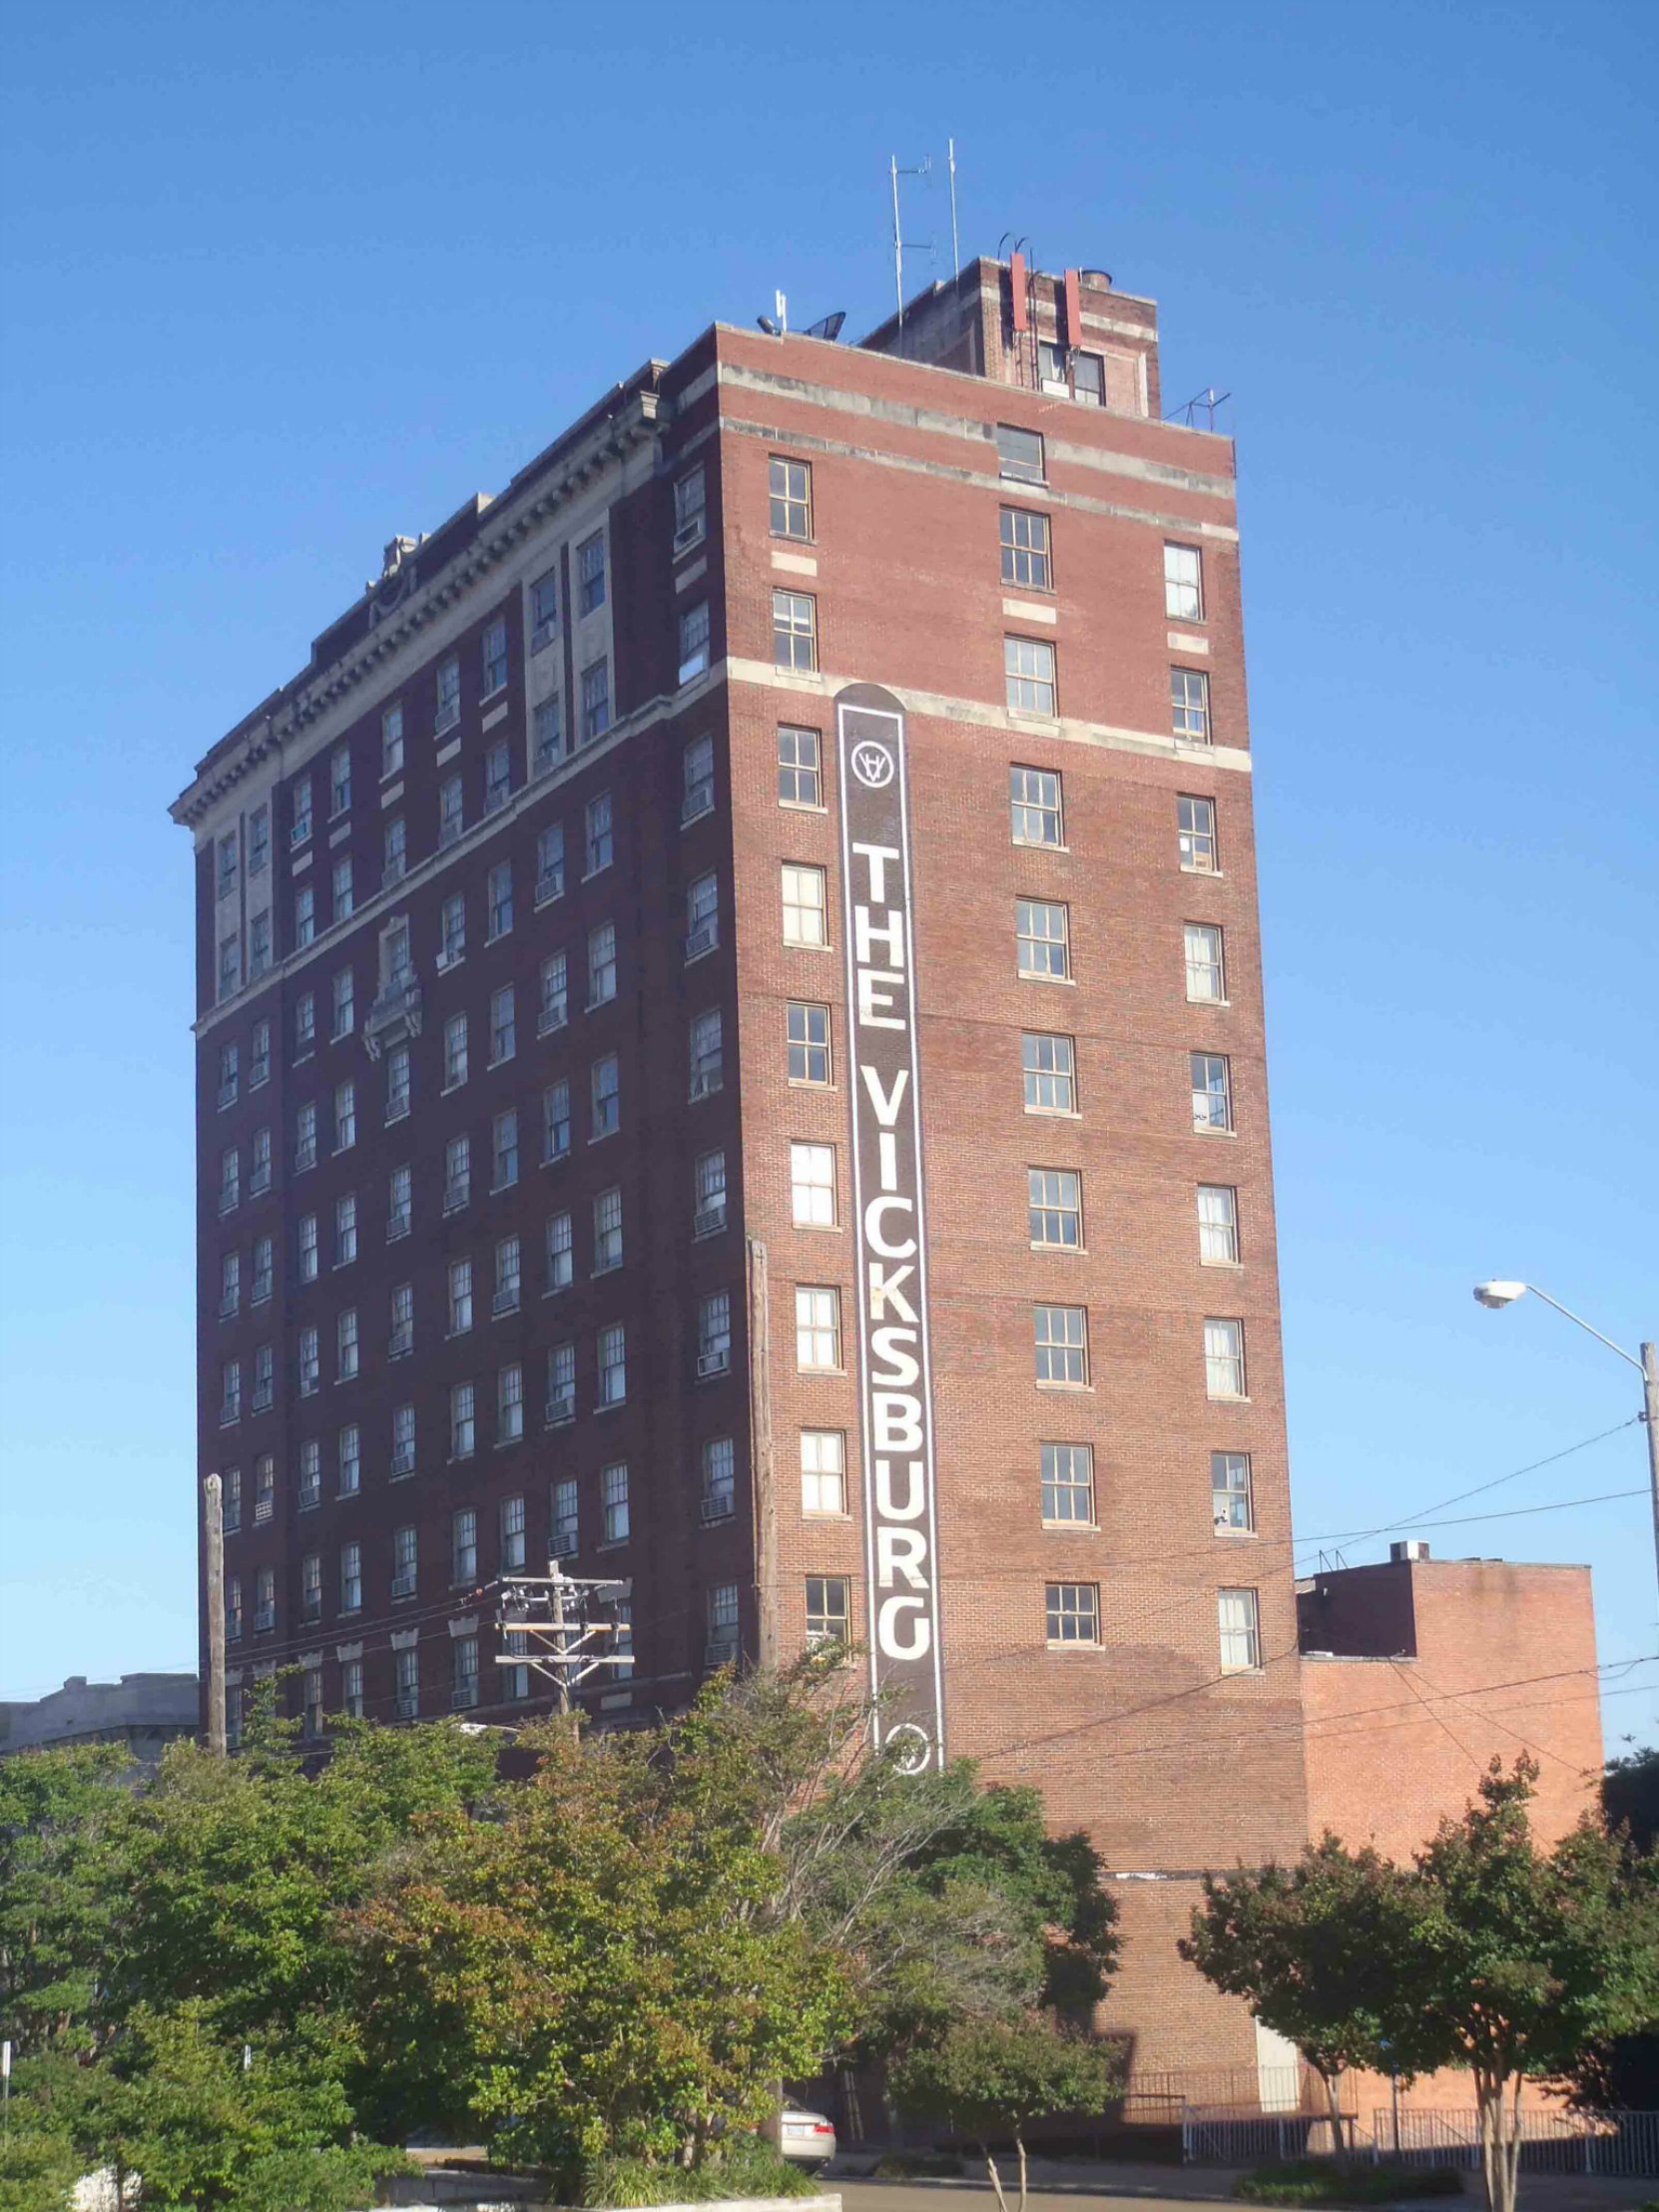 Hotel Vicksburg, Vicksburg, Mississippi